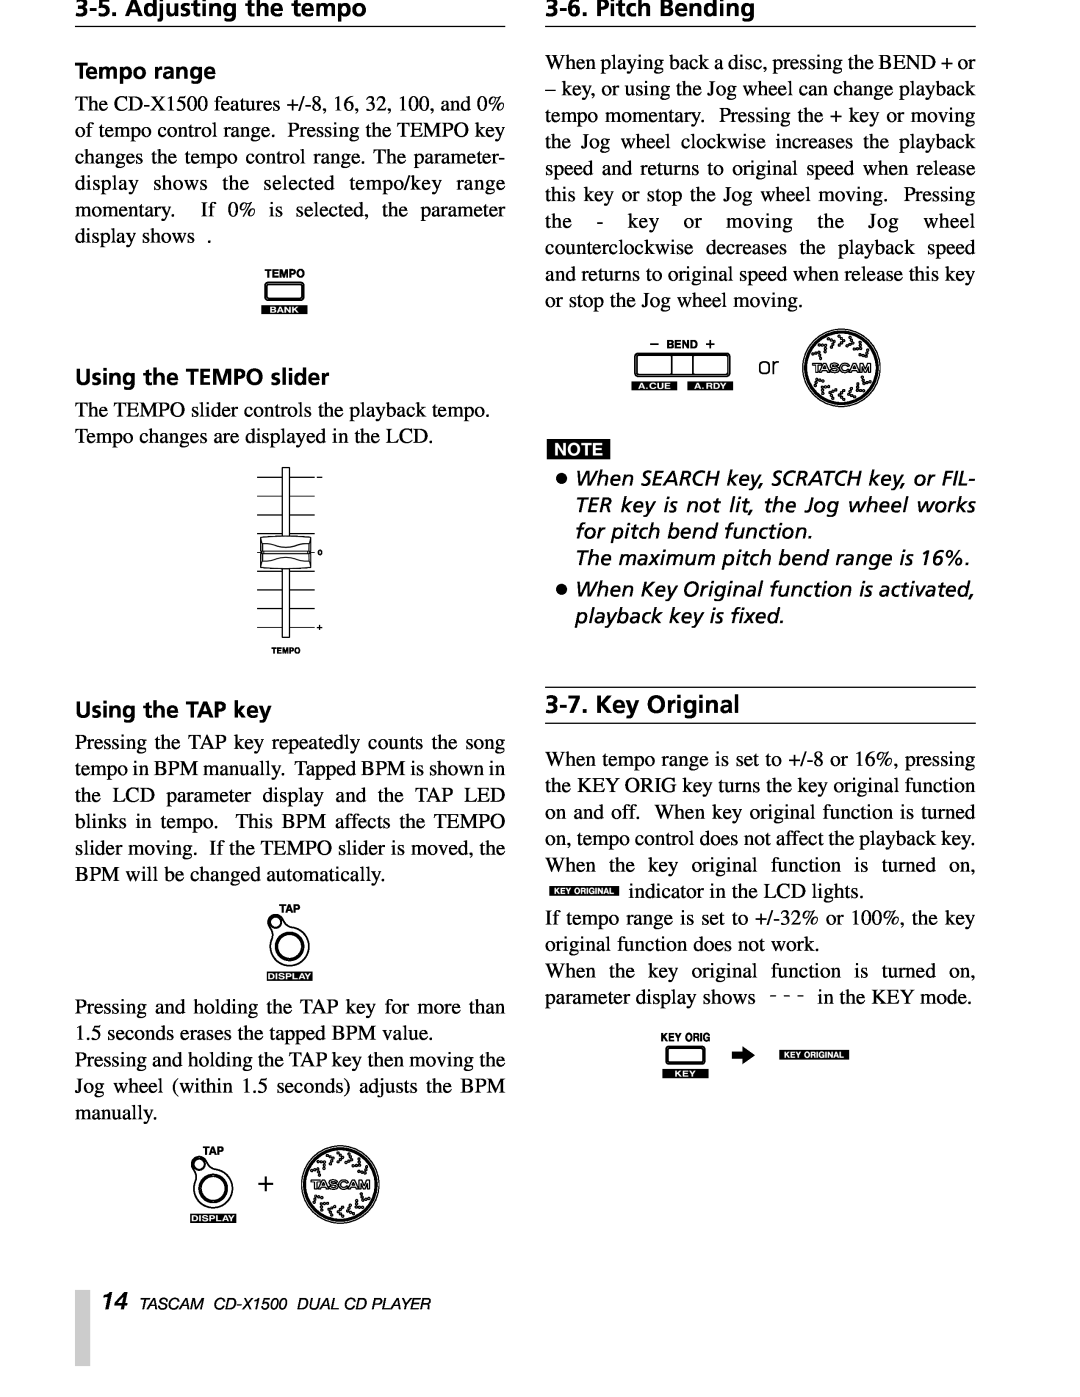 Sony CD-X1500 Adjusting the tempo, Pitch Bending, Key Original, Tempo range, Using the TEMPO slider, Using the TAP key 